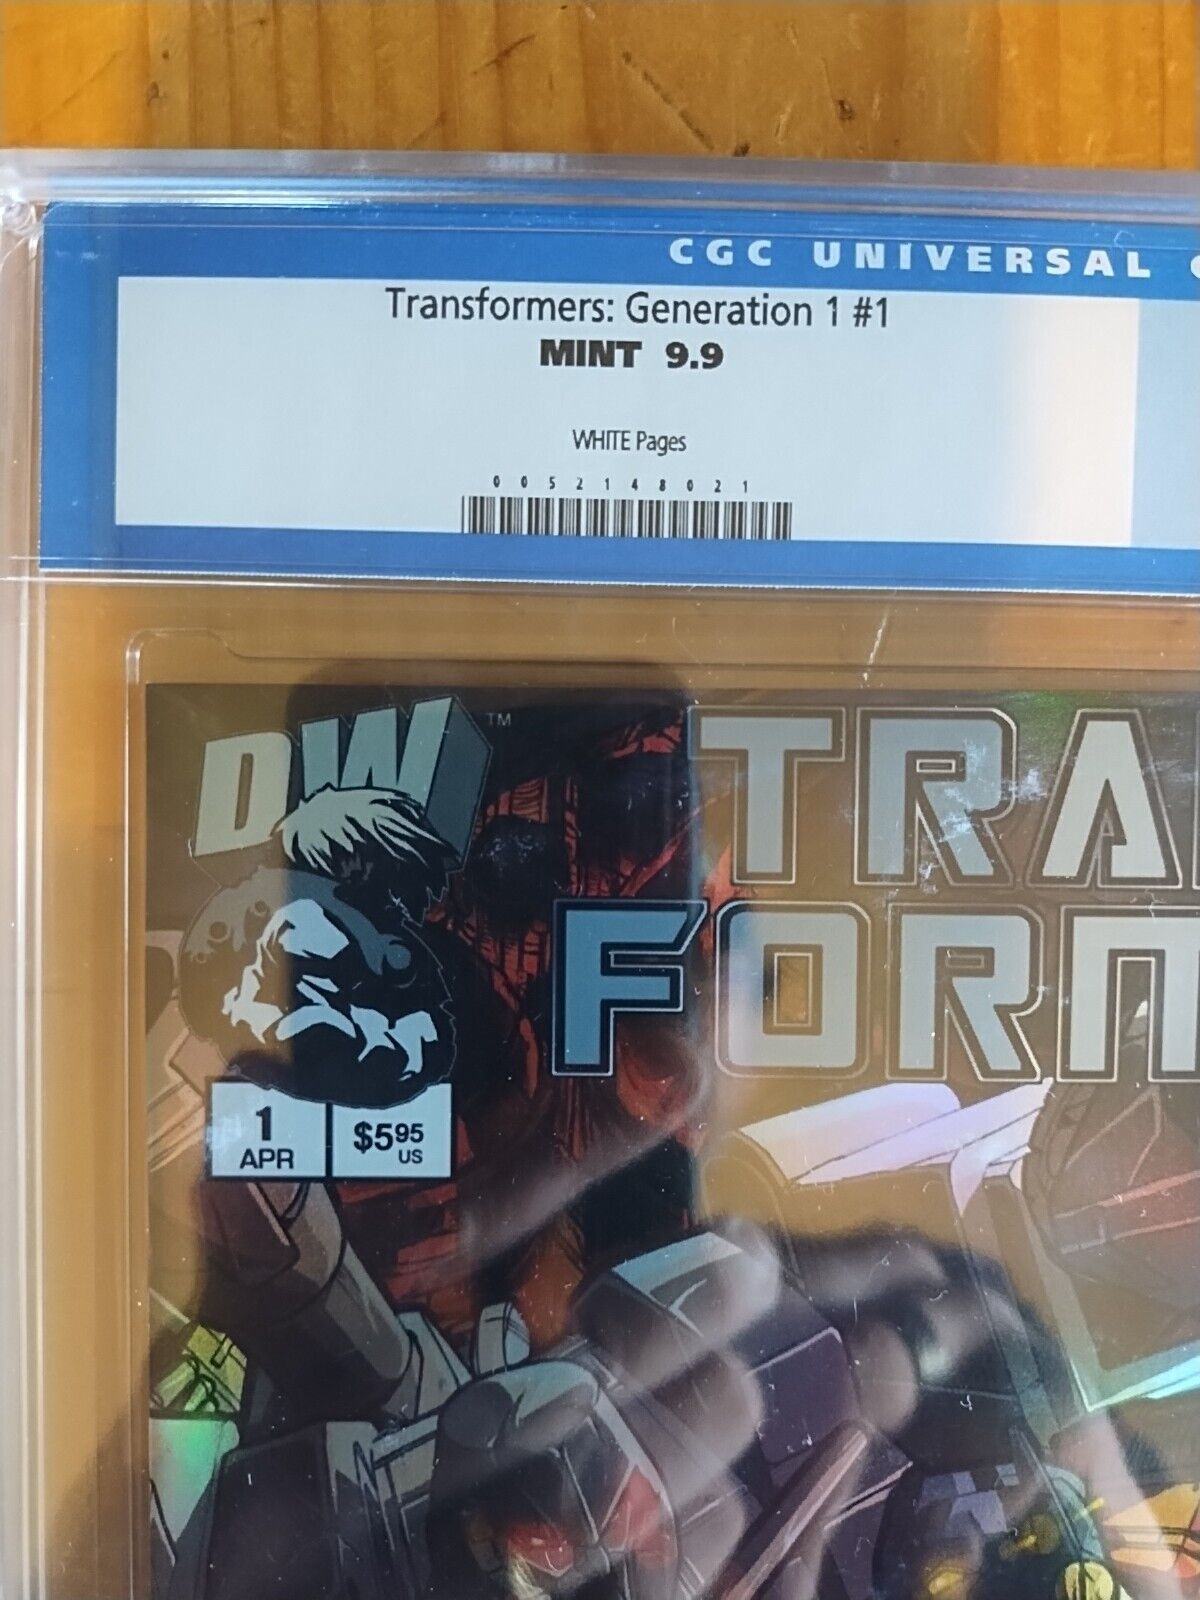 Transformers: Issue 1 Generation 1 Wrap Around Variant Cgc 9.9 Vintage Label.